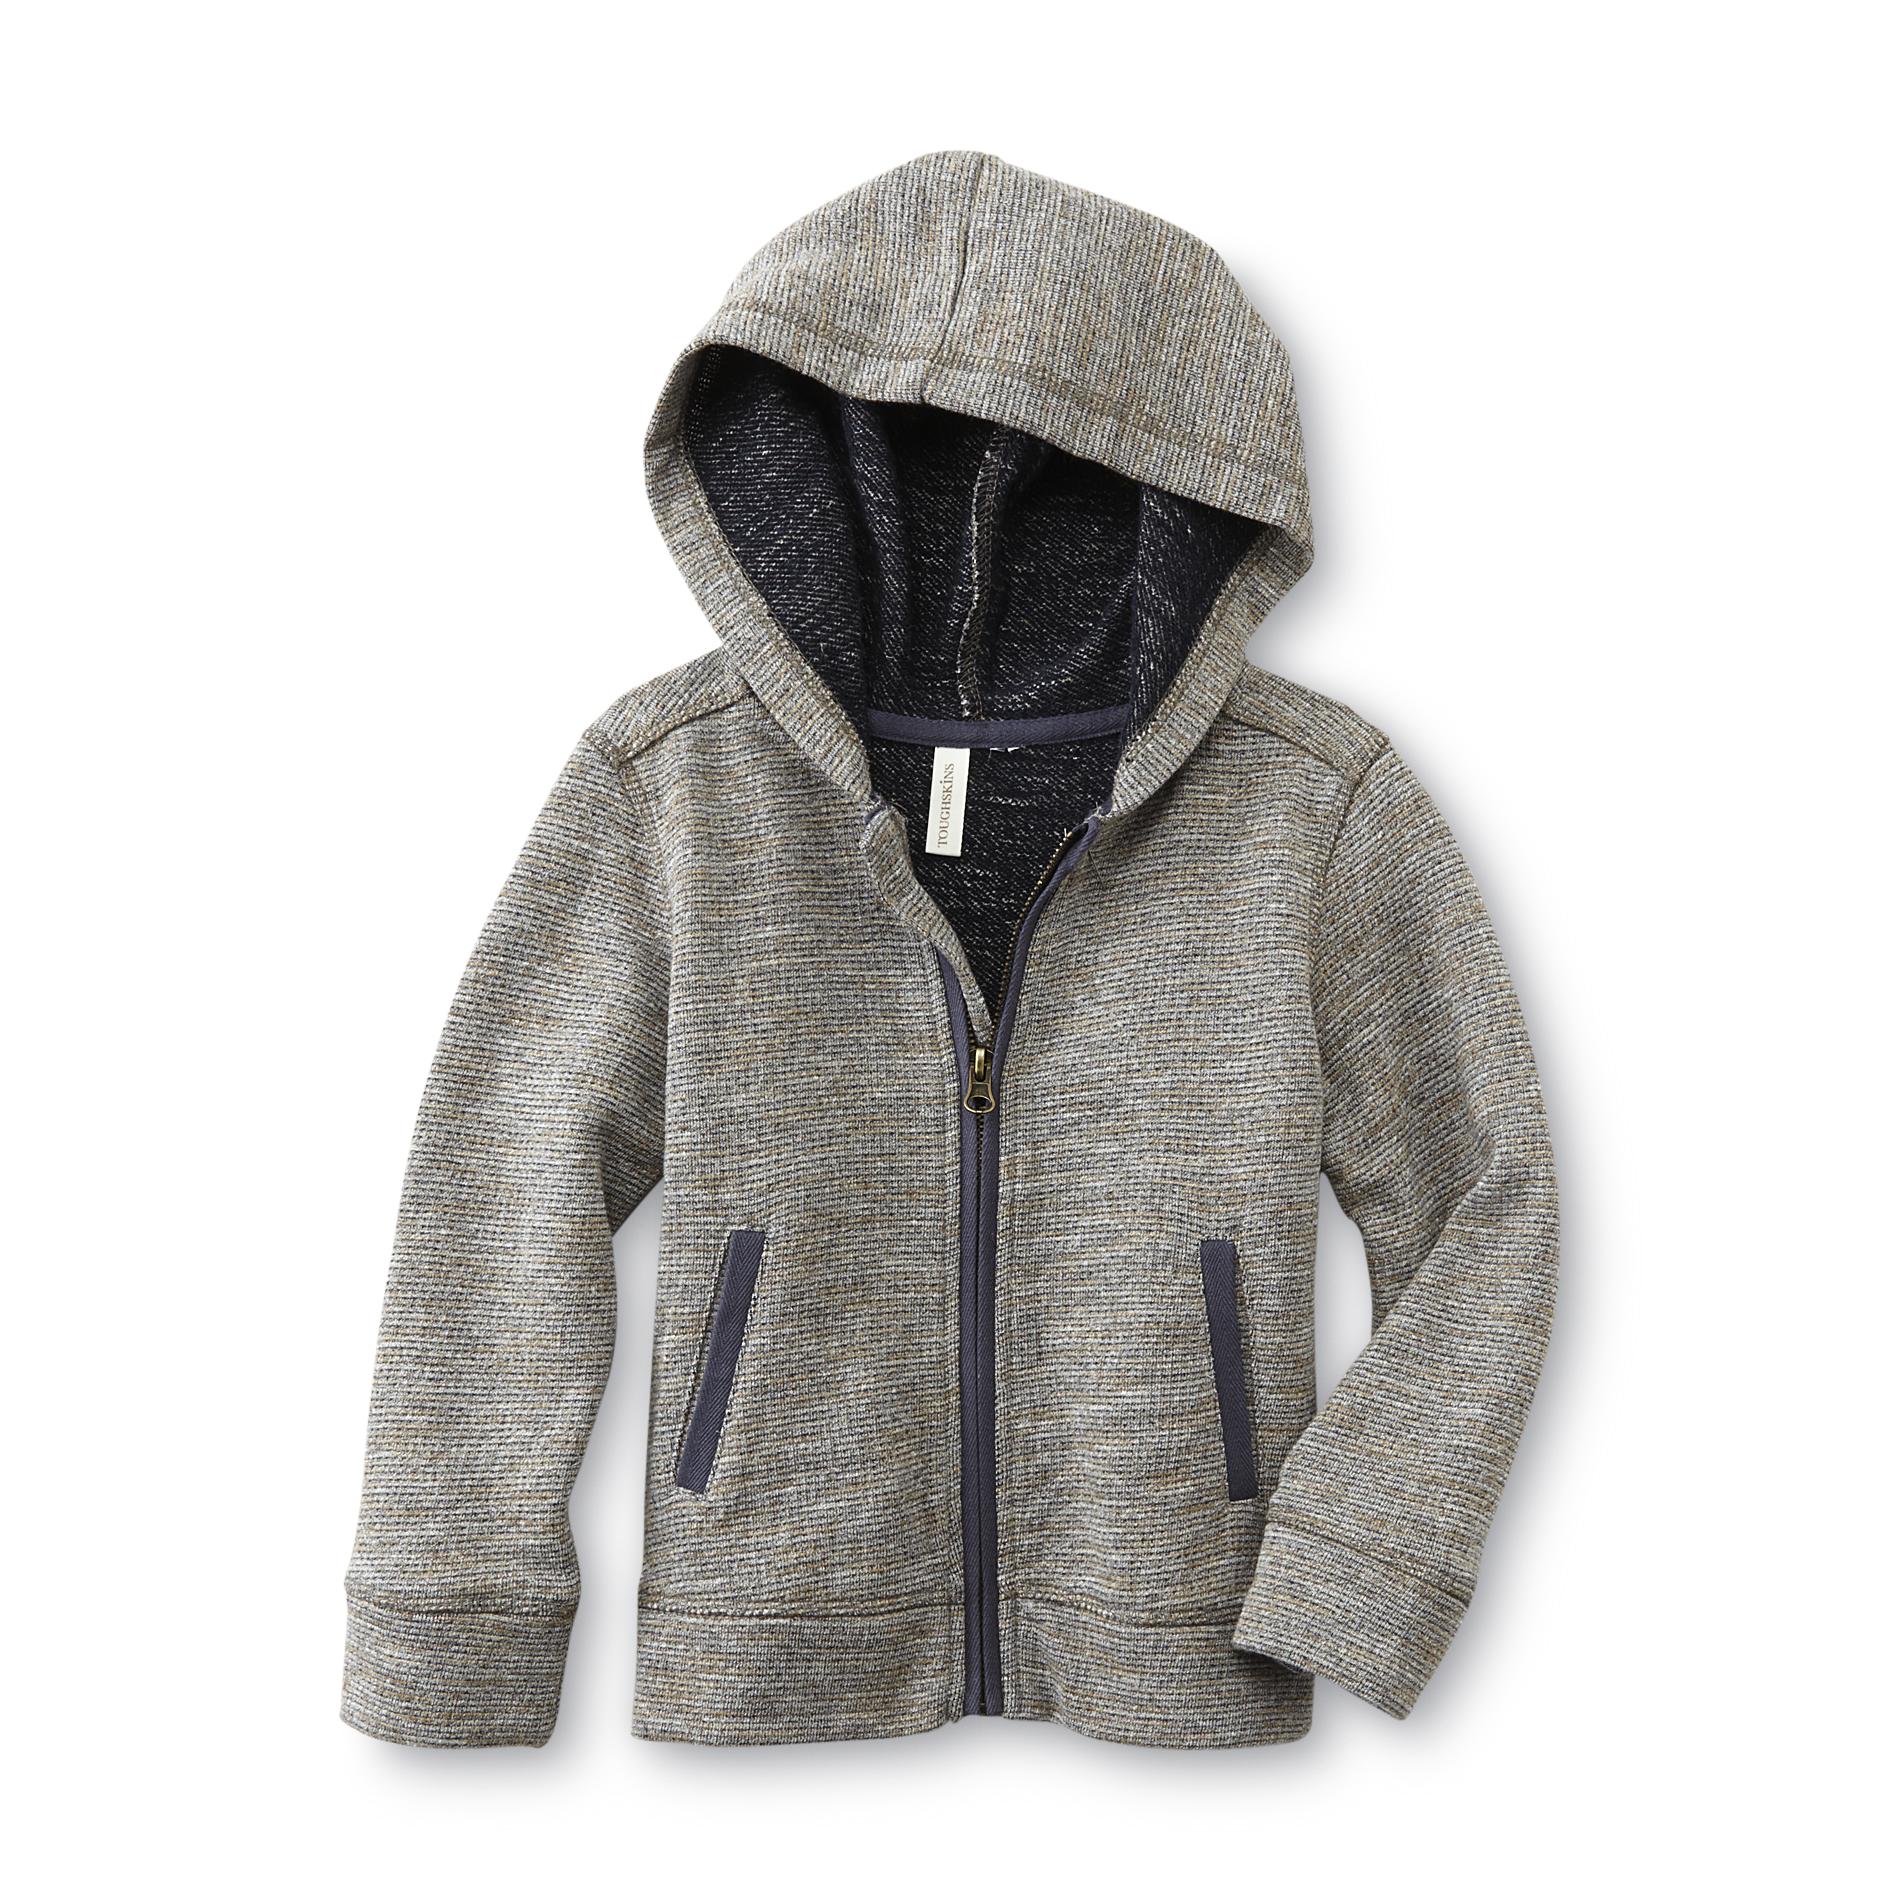 Toughskins Infant & Toddler Boy's Hoodie Jacket - Marled